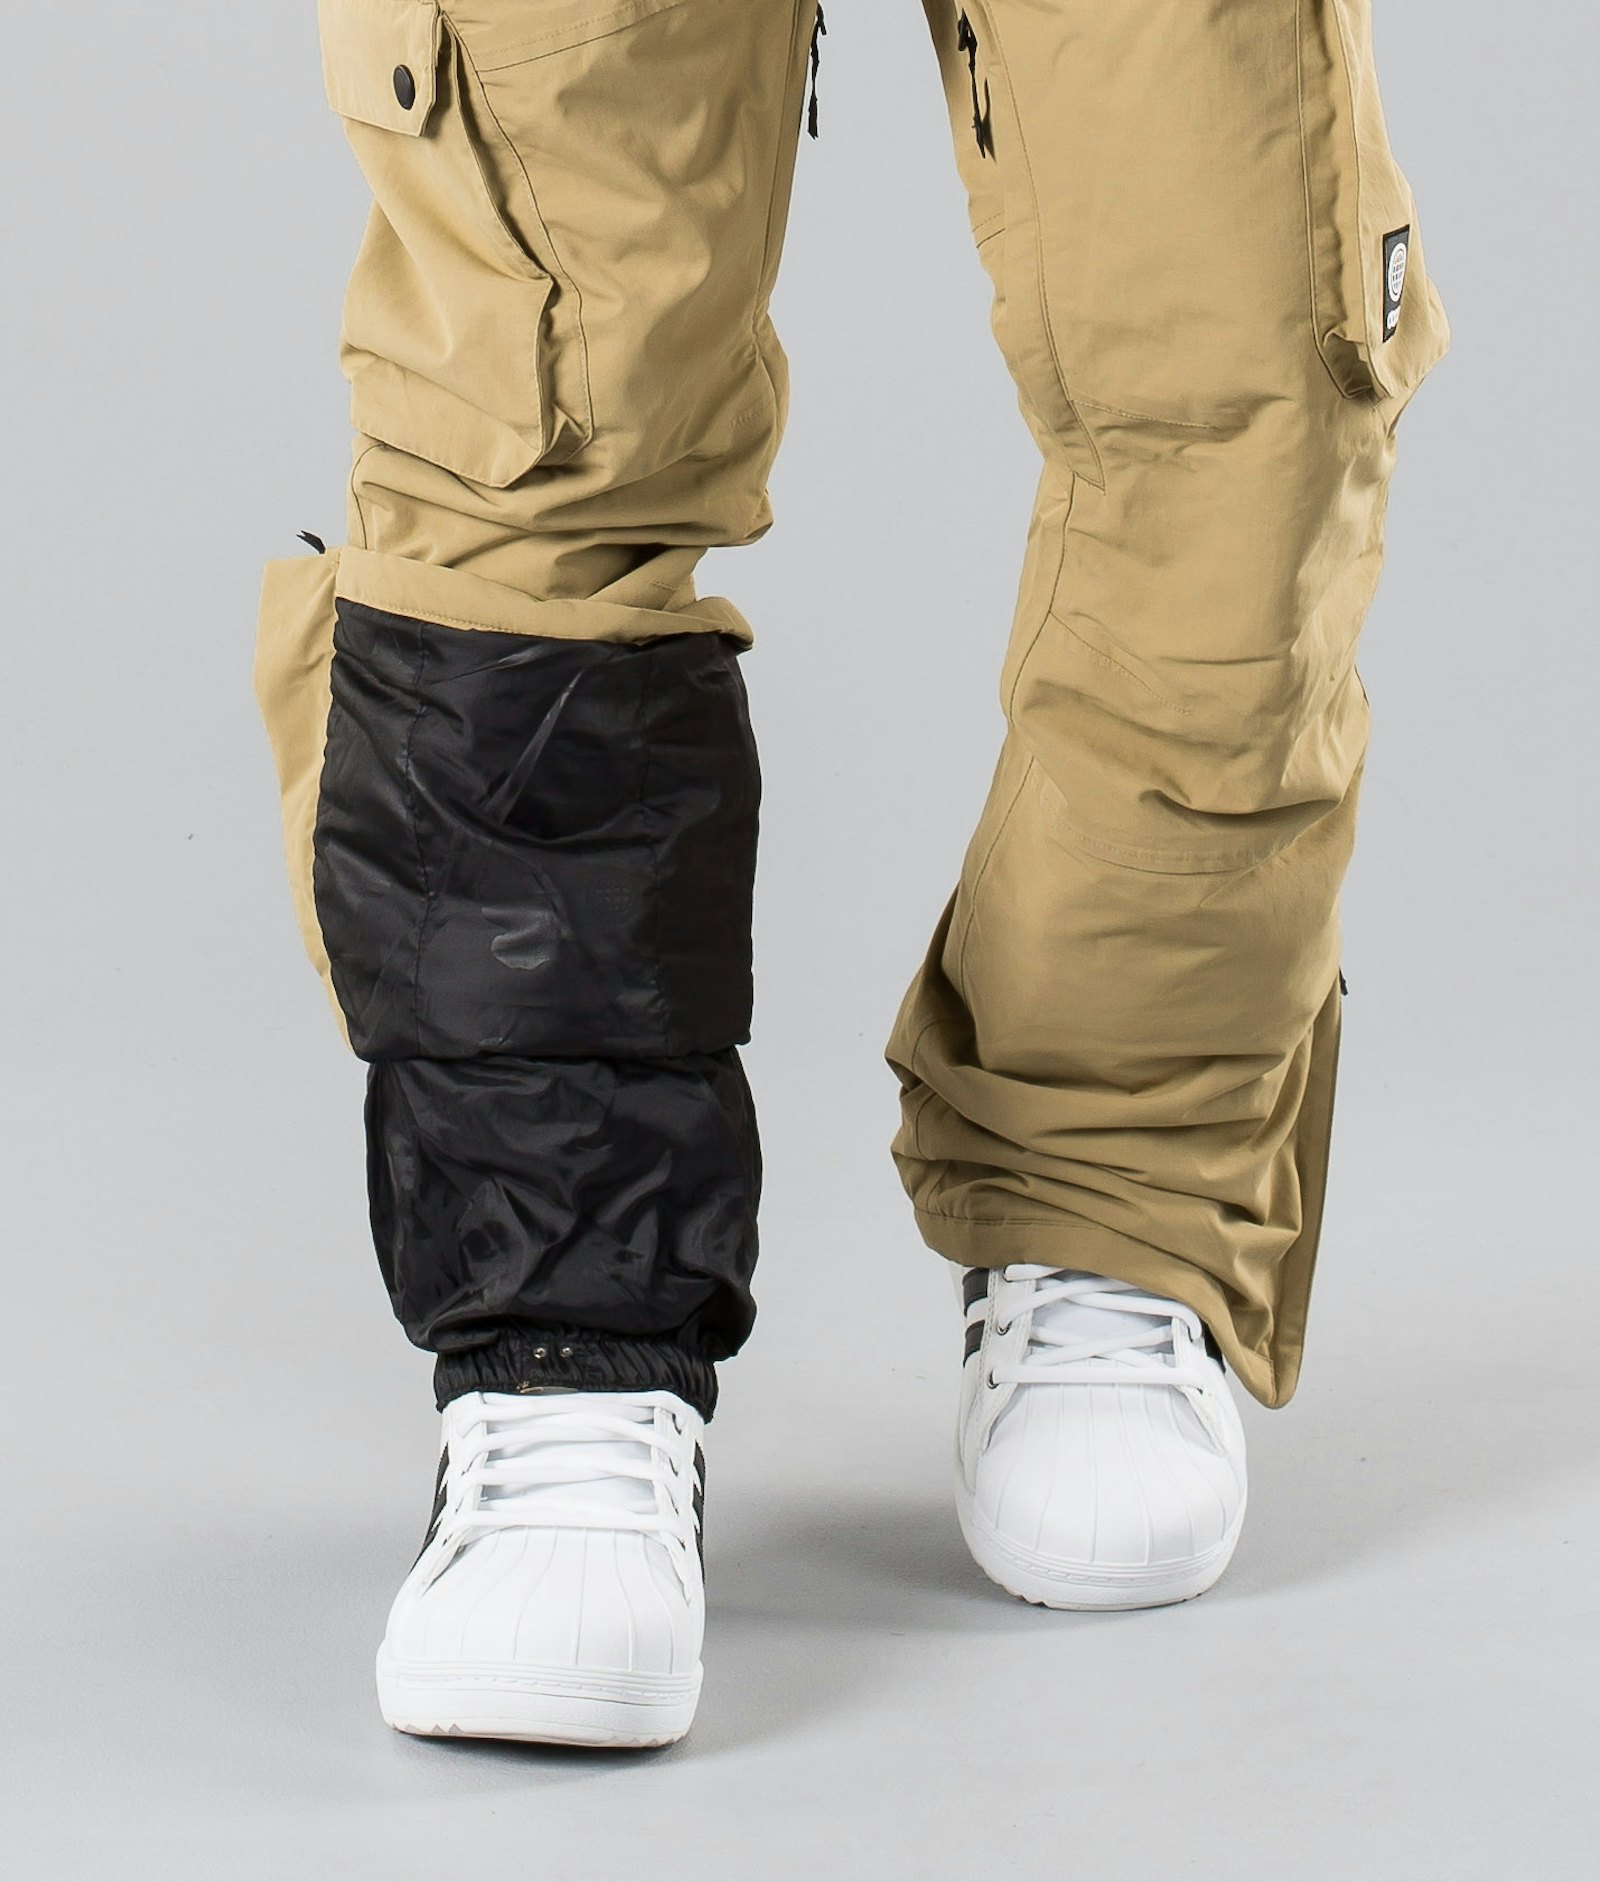 Dope Iconic 2018 Pantalon de Snowboard Homme Khaki